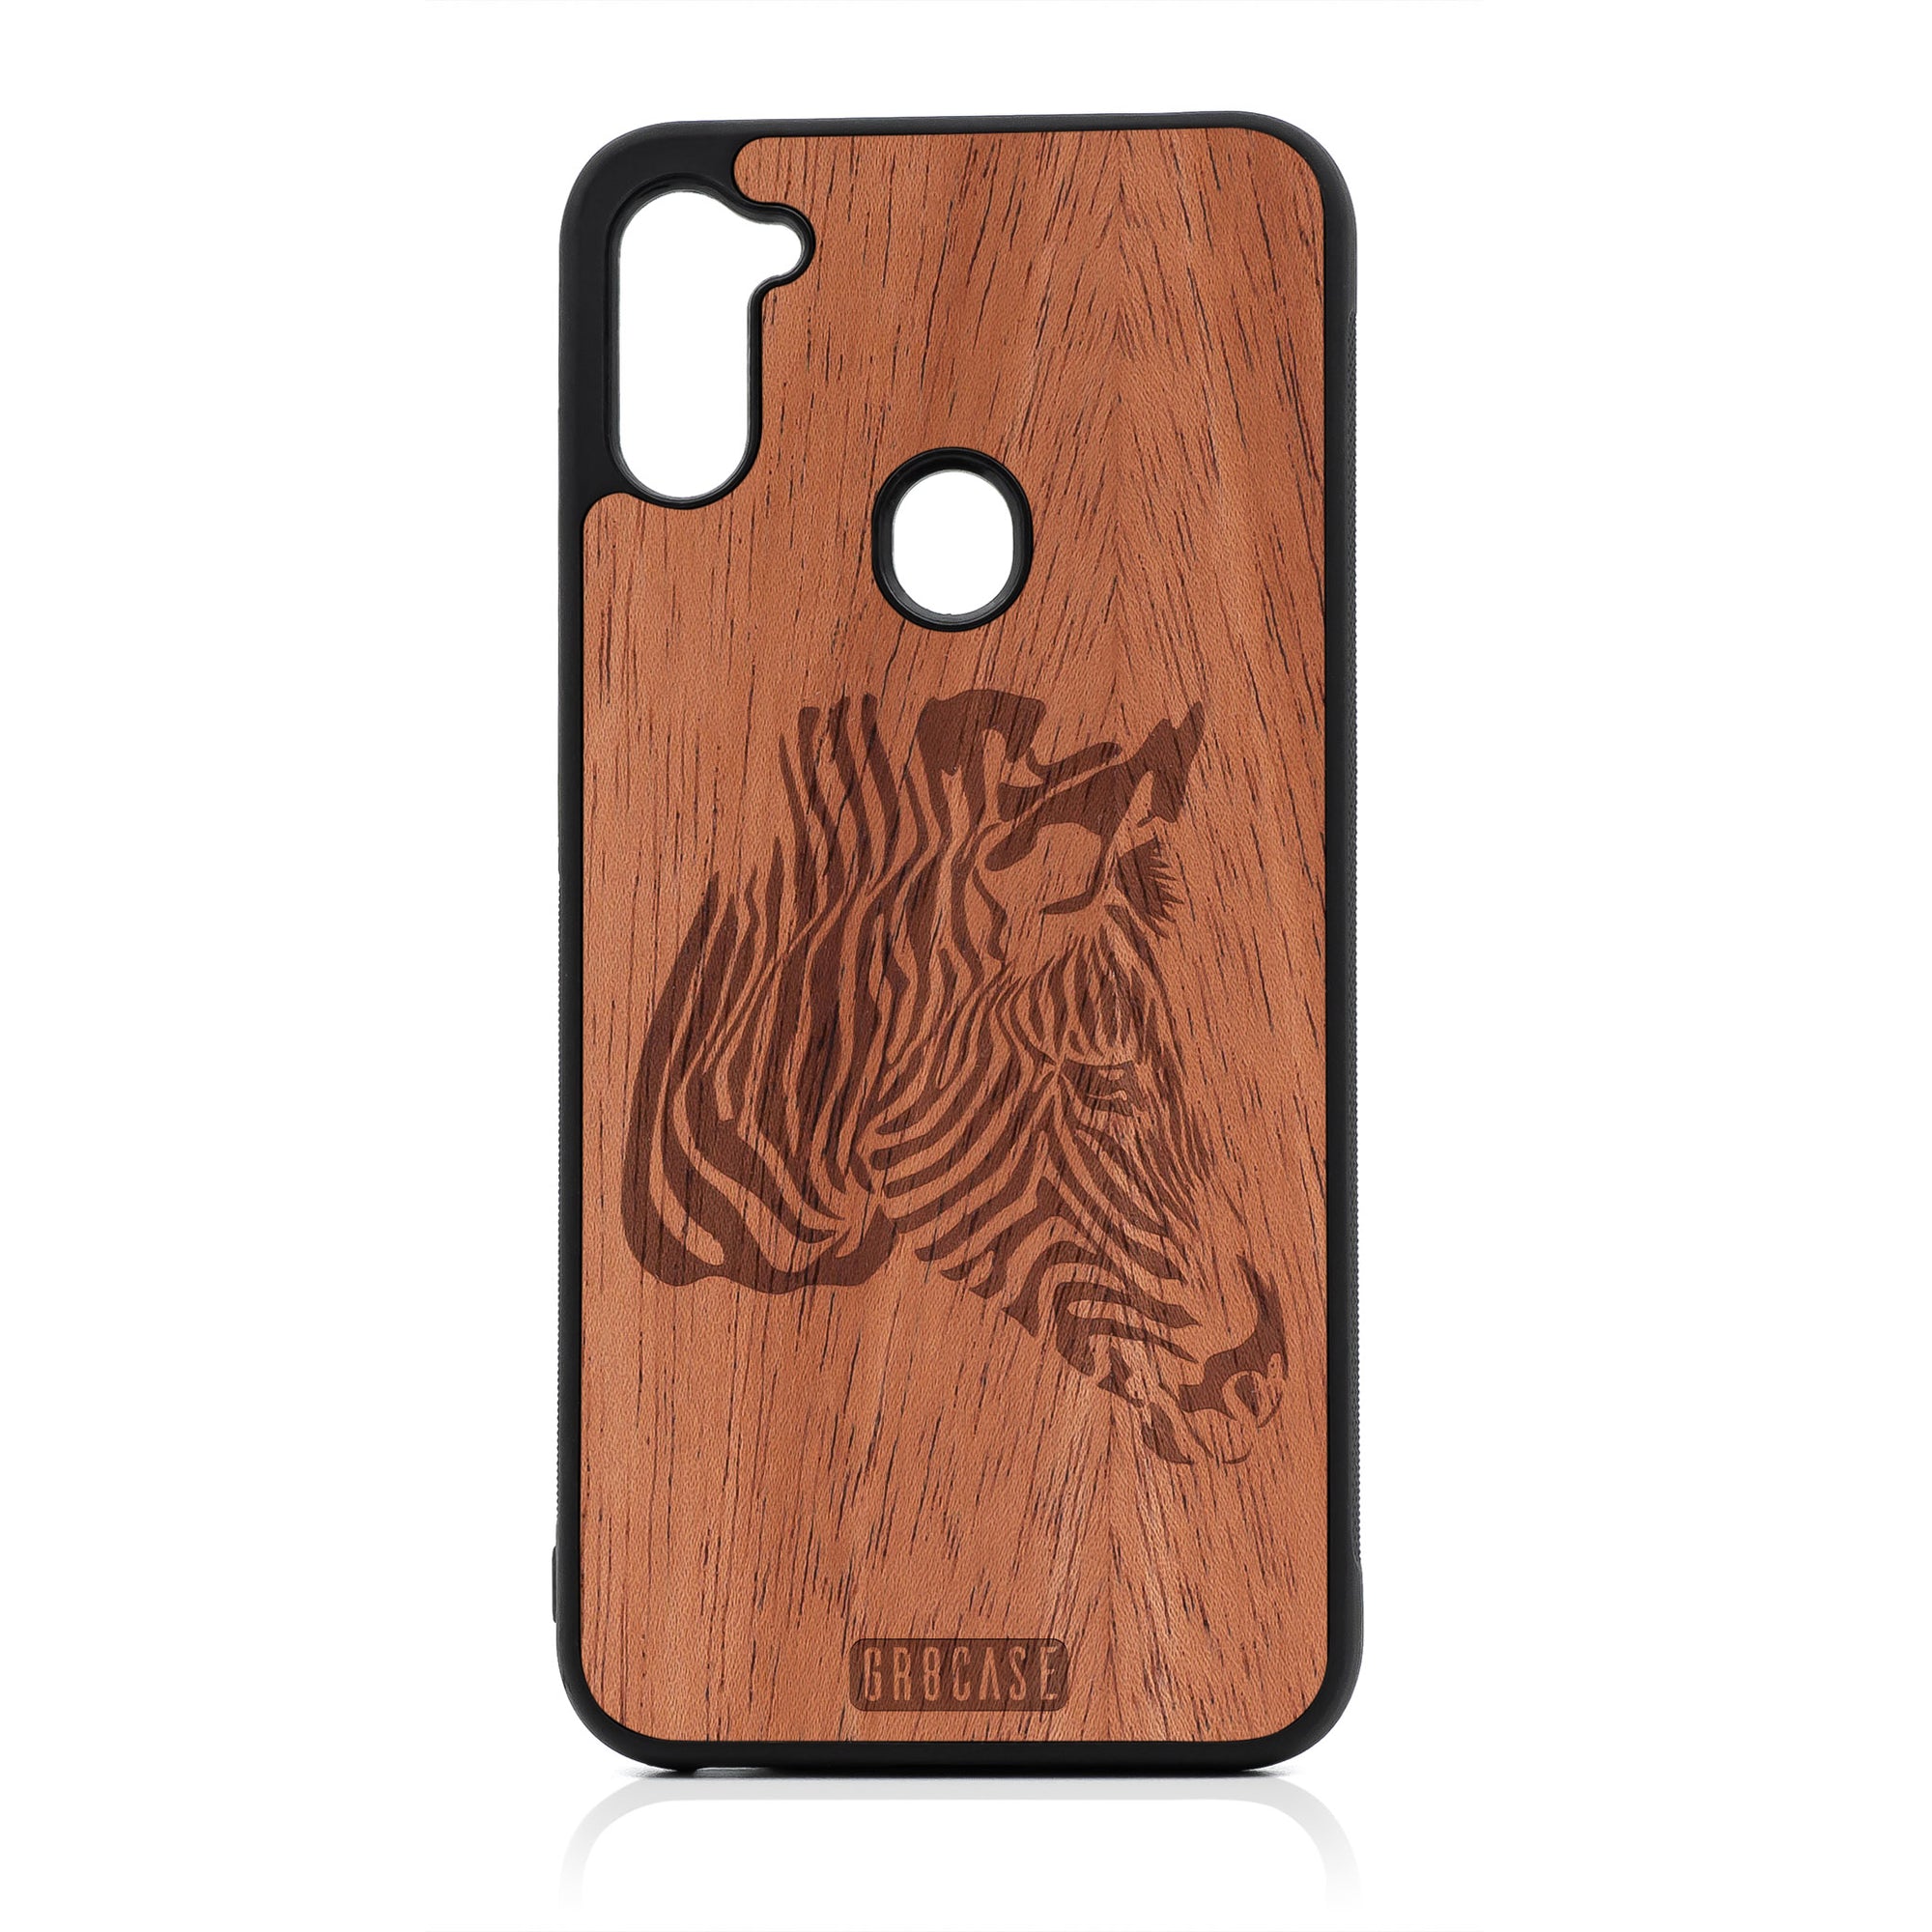 Zebra Design Wood Case For Samsung Galaxy A11